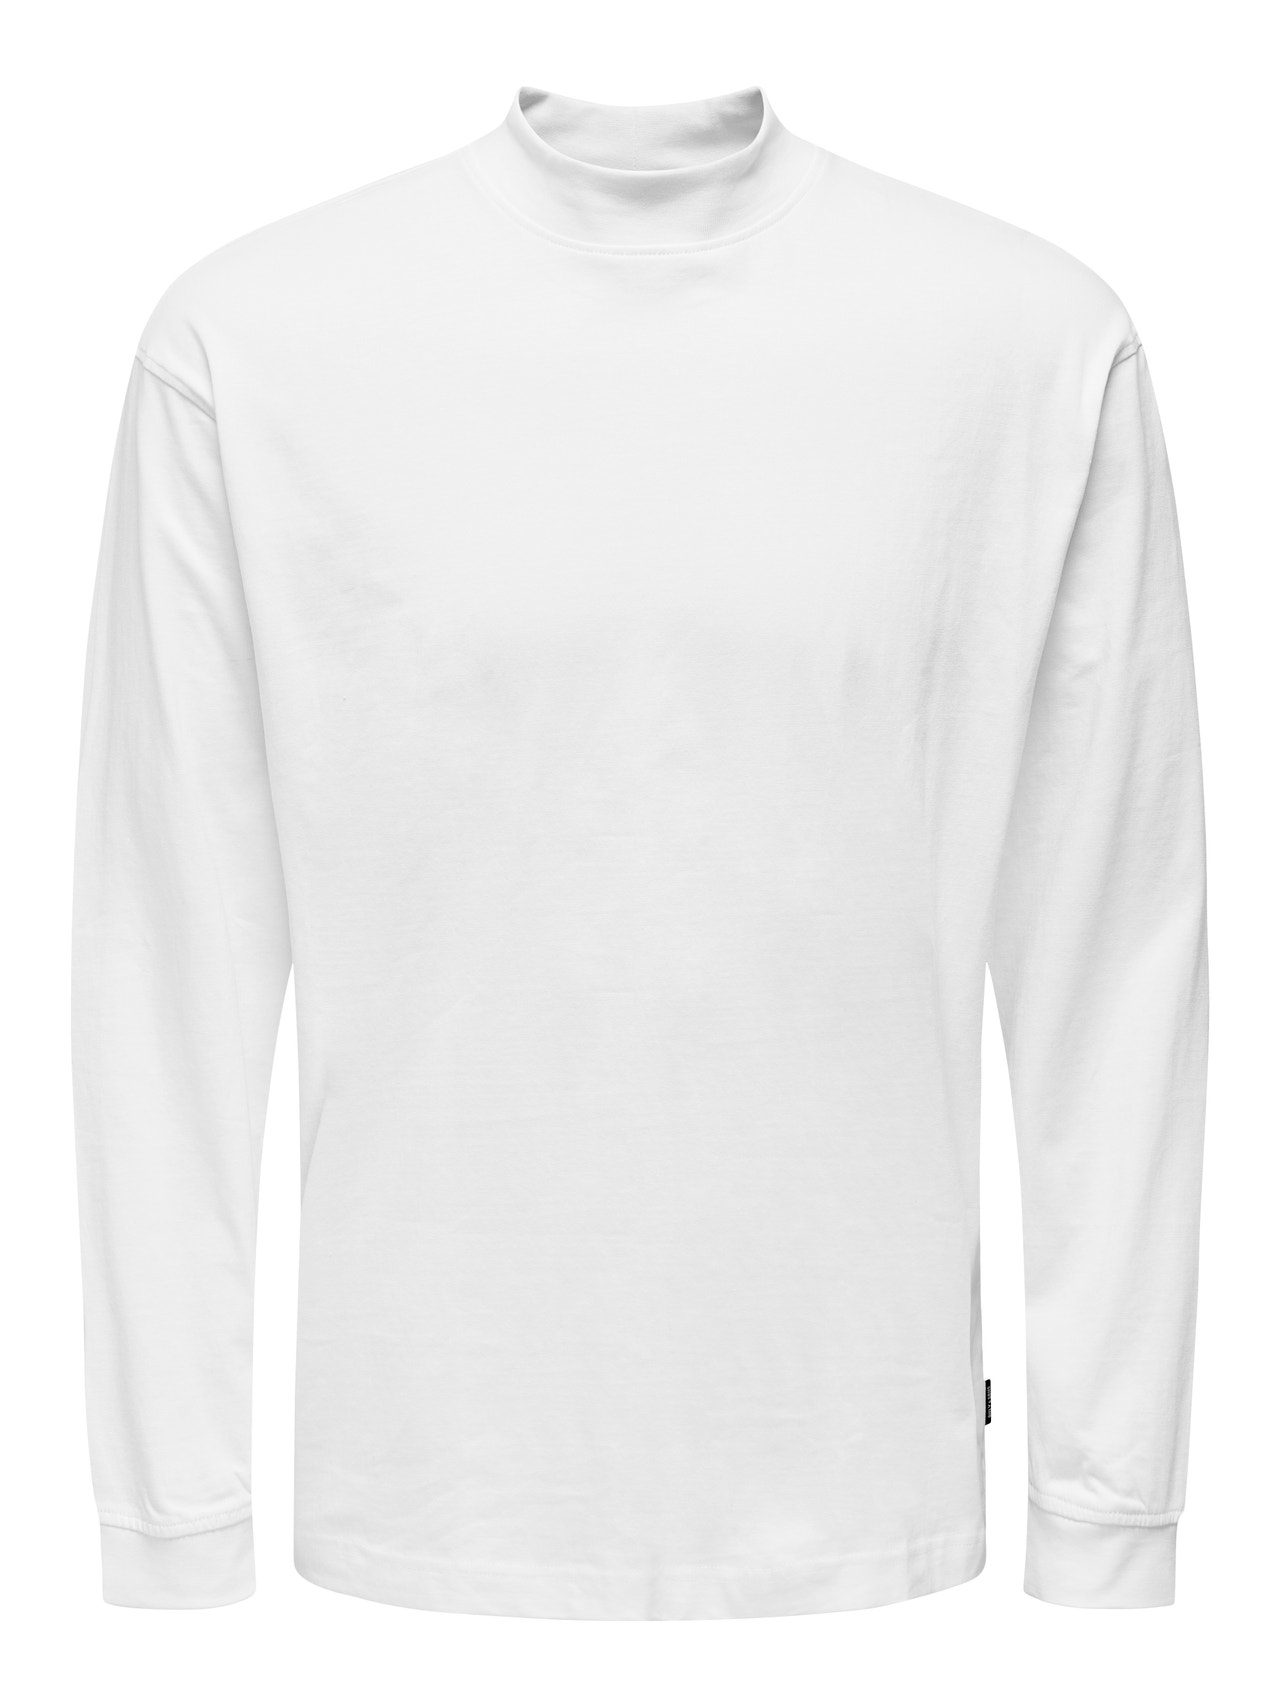 Weiß & T-Shirt Stehkragen | Locker geschnitten | SONS® ONLY